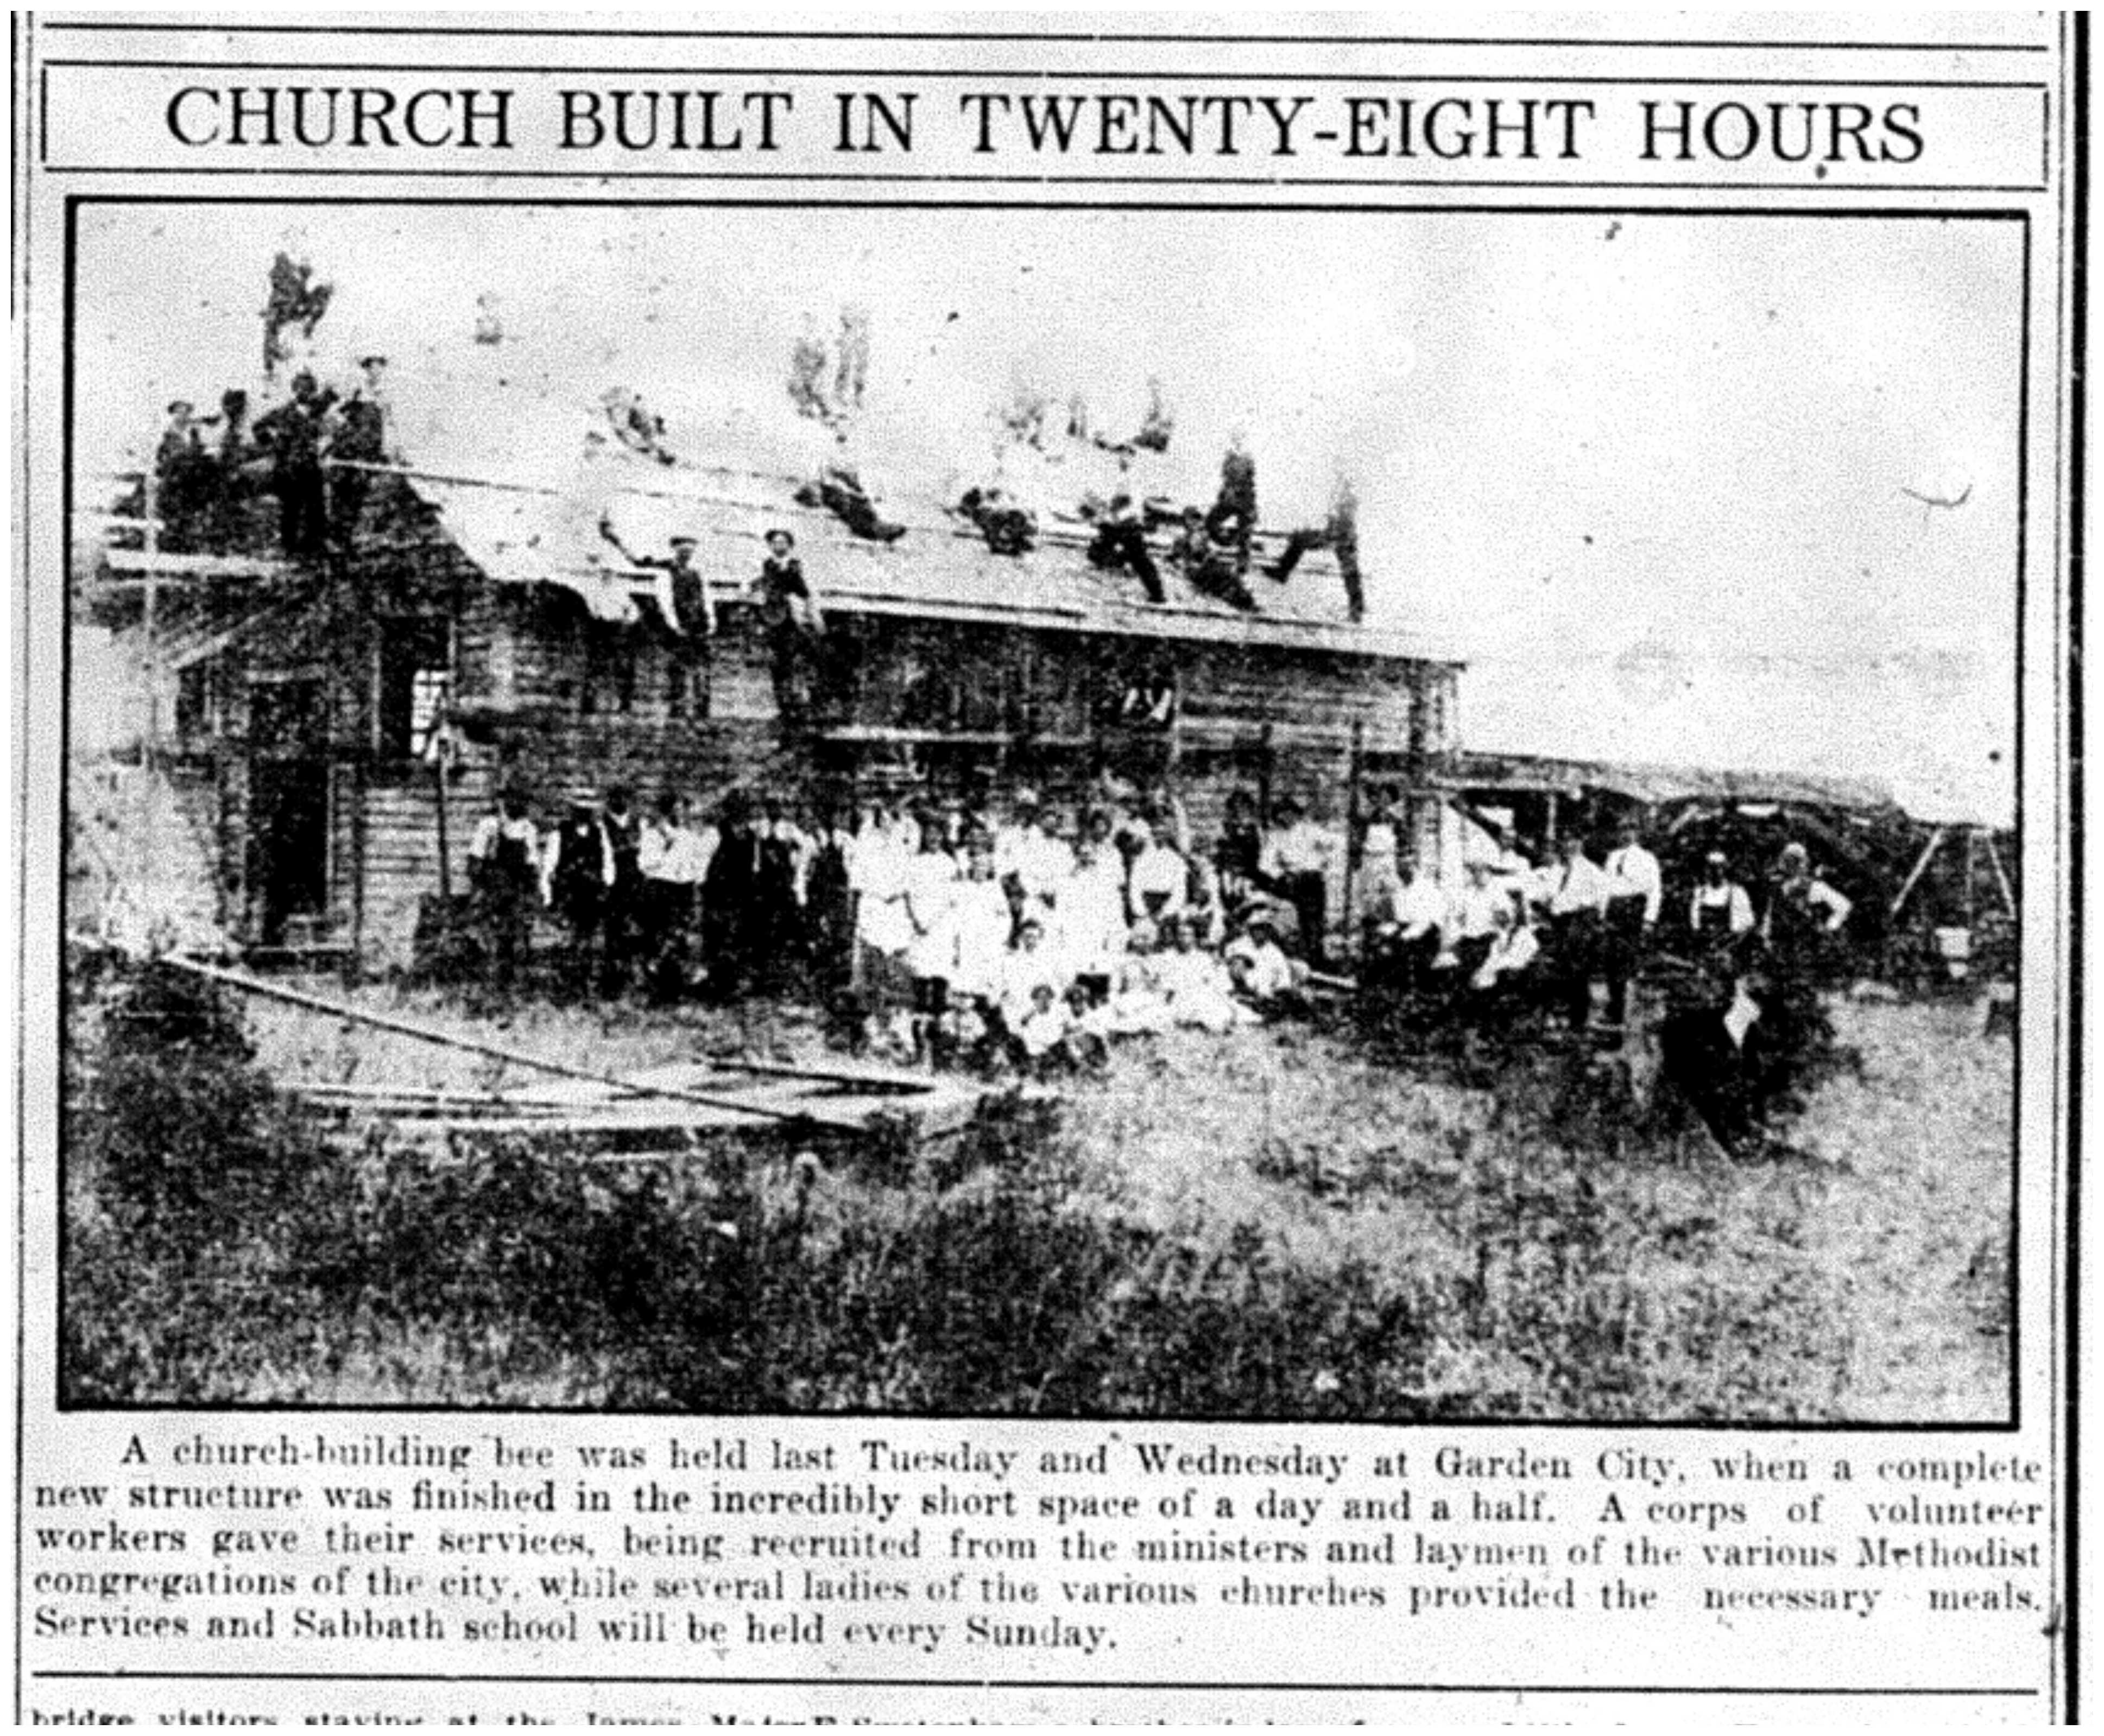 "Church Built in Twenty-Eight Hours"